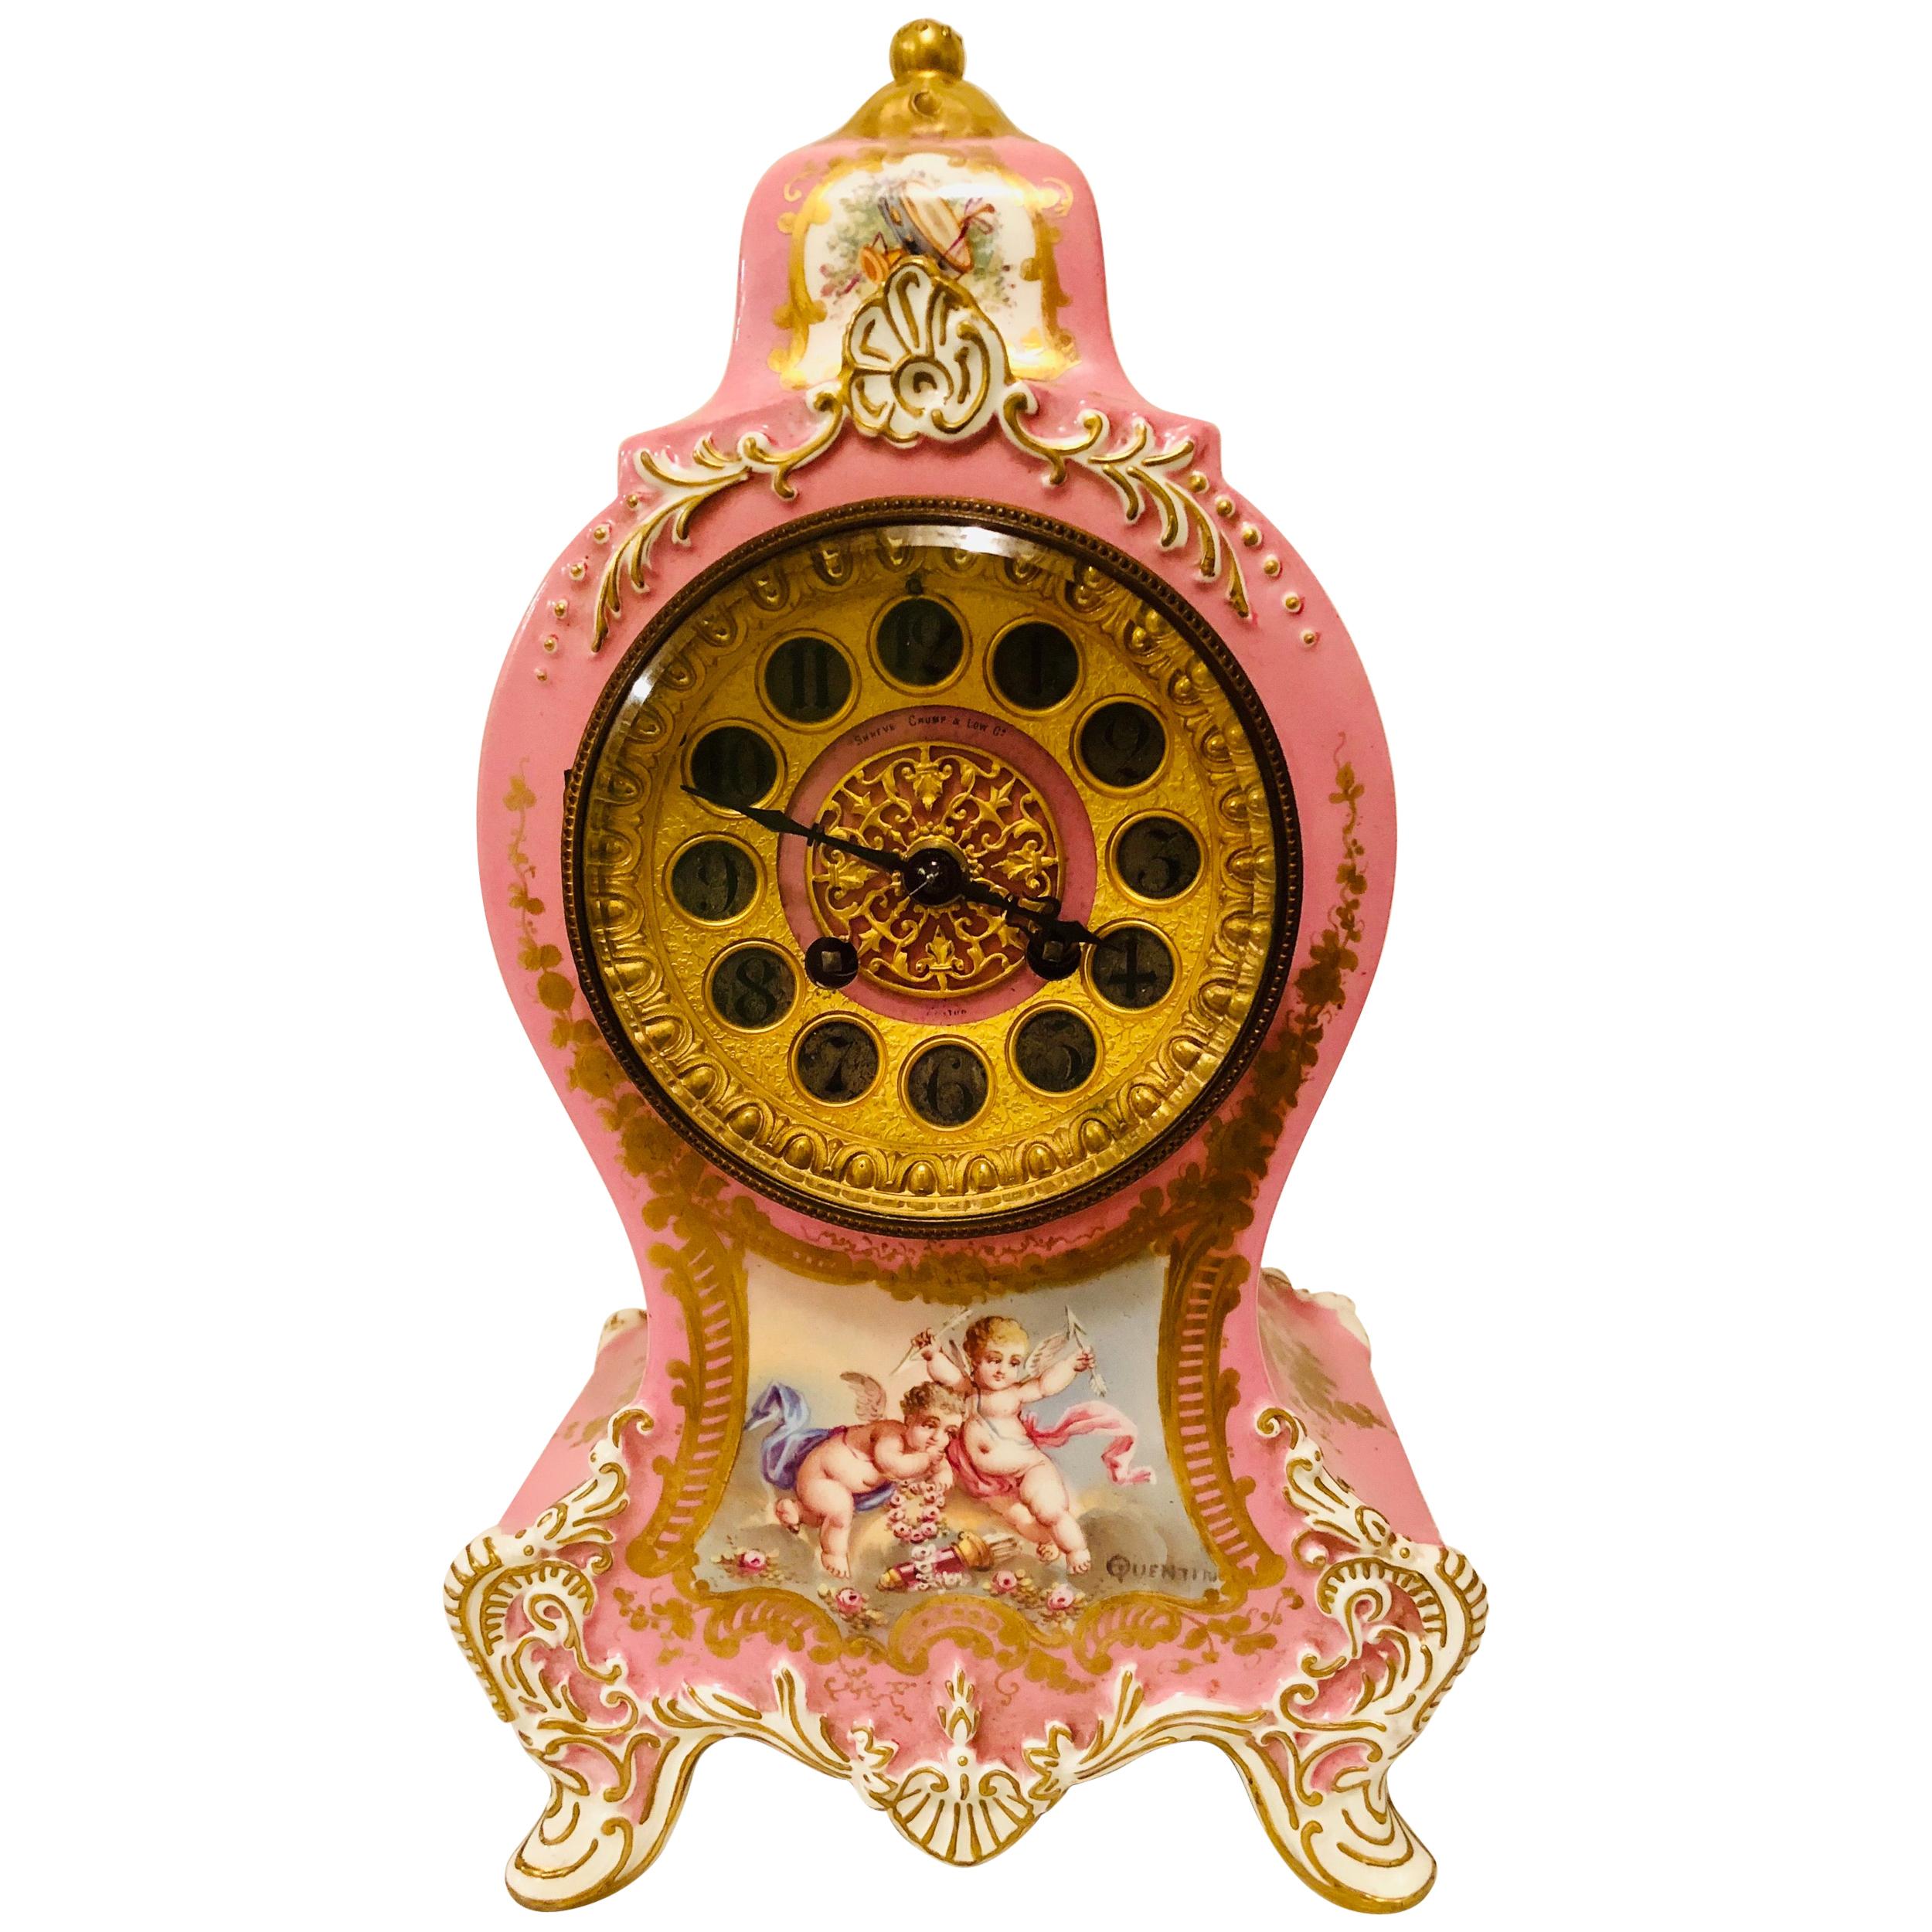 French Pink Pompadeur Longwy Mantel Clock with Etienne Maxant Brevete Works